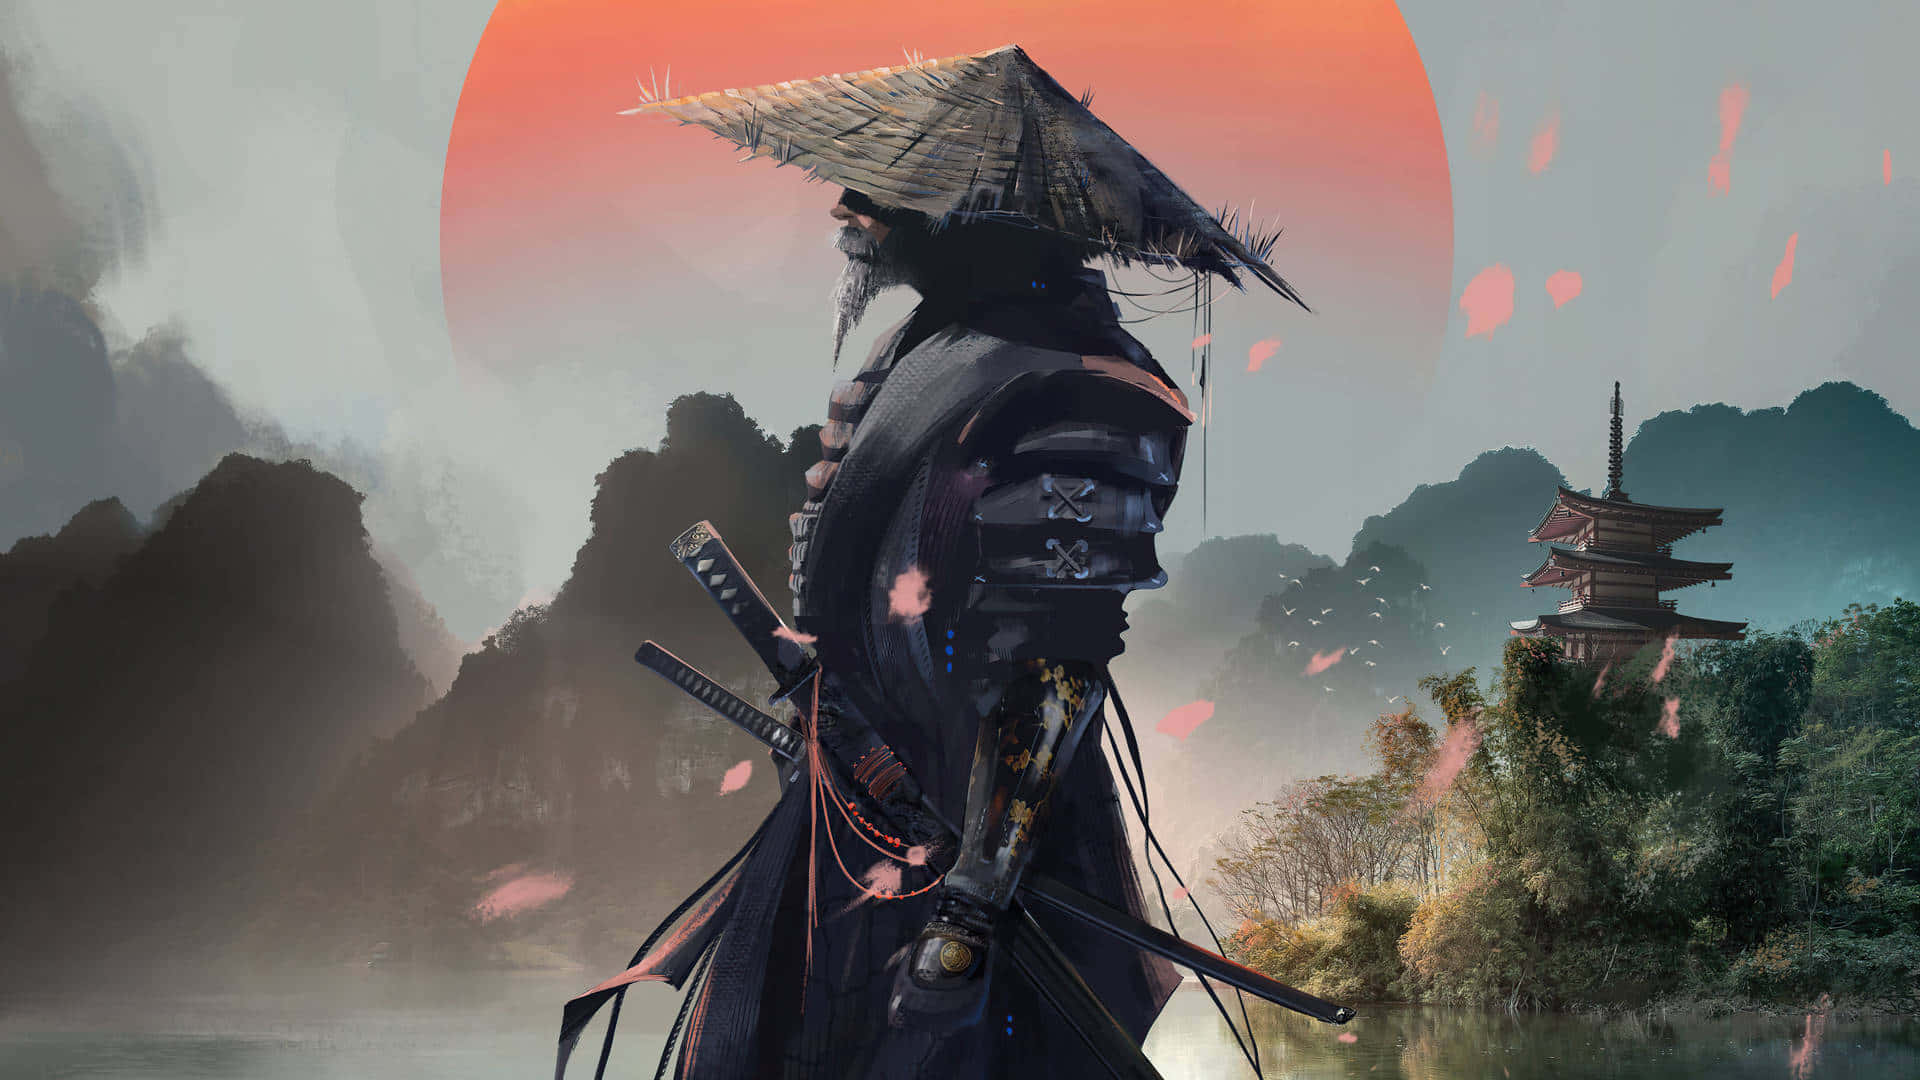 Samuraibaggrundsbillede